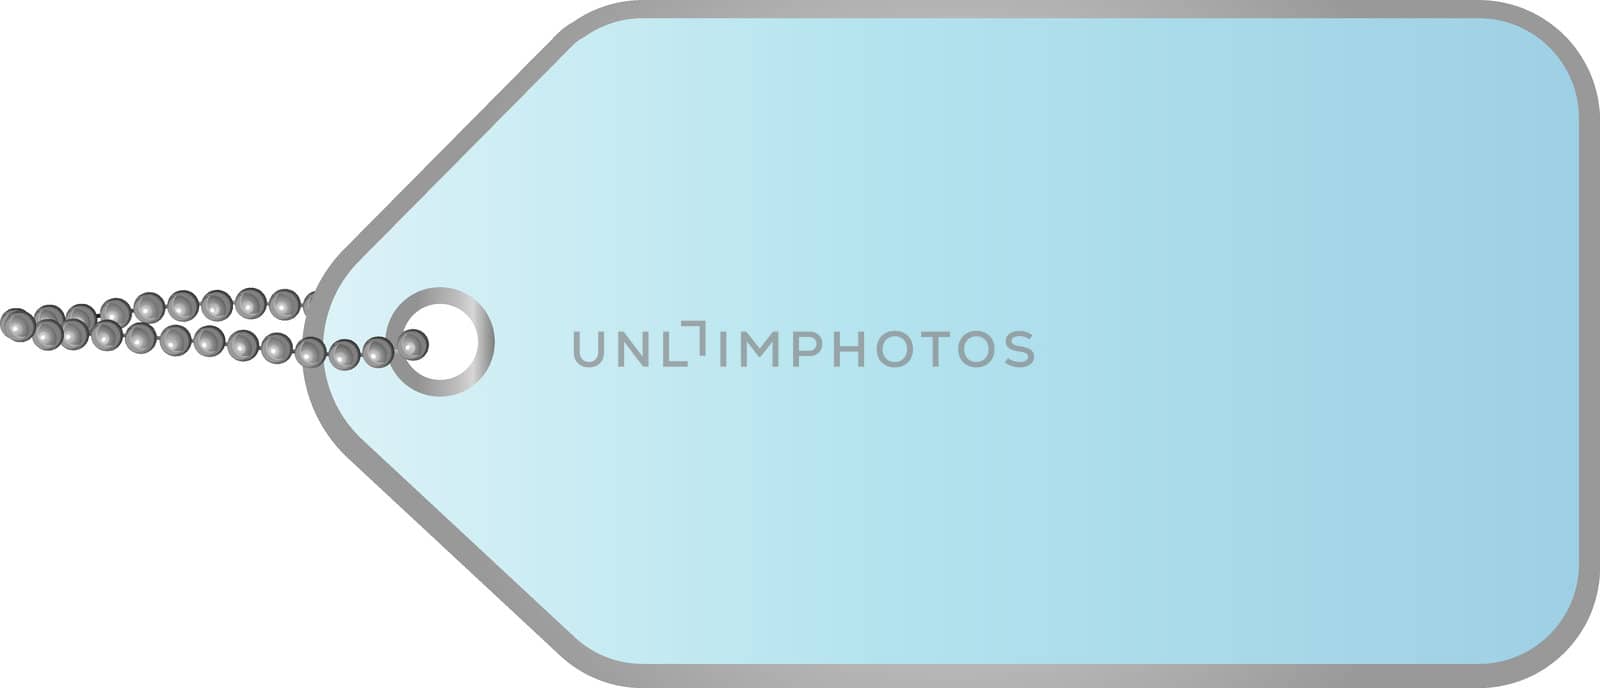 illustration of a blank blue cardboard tag